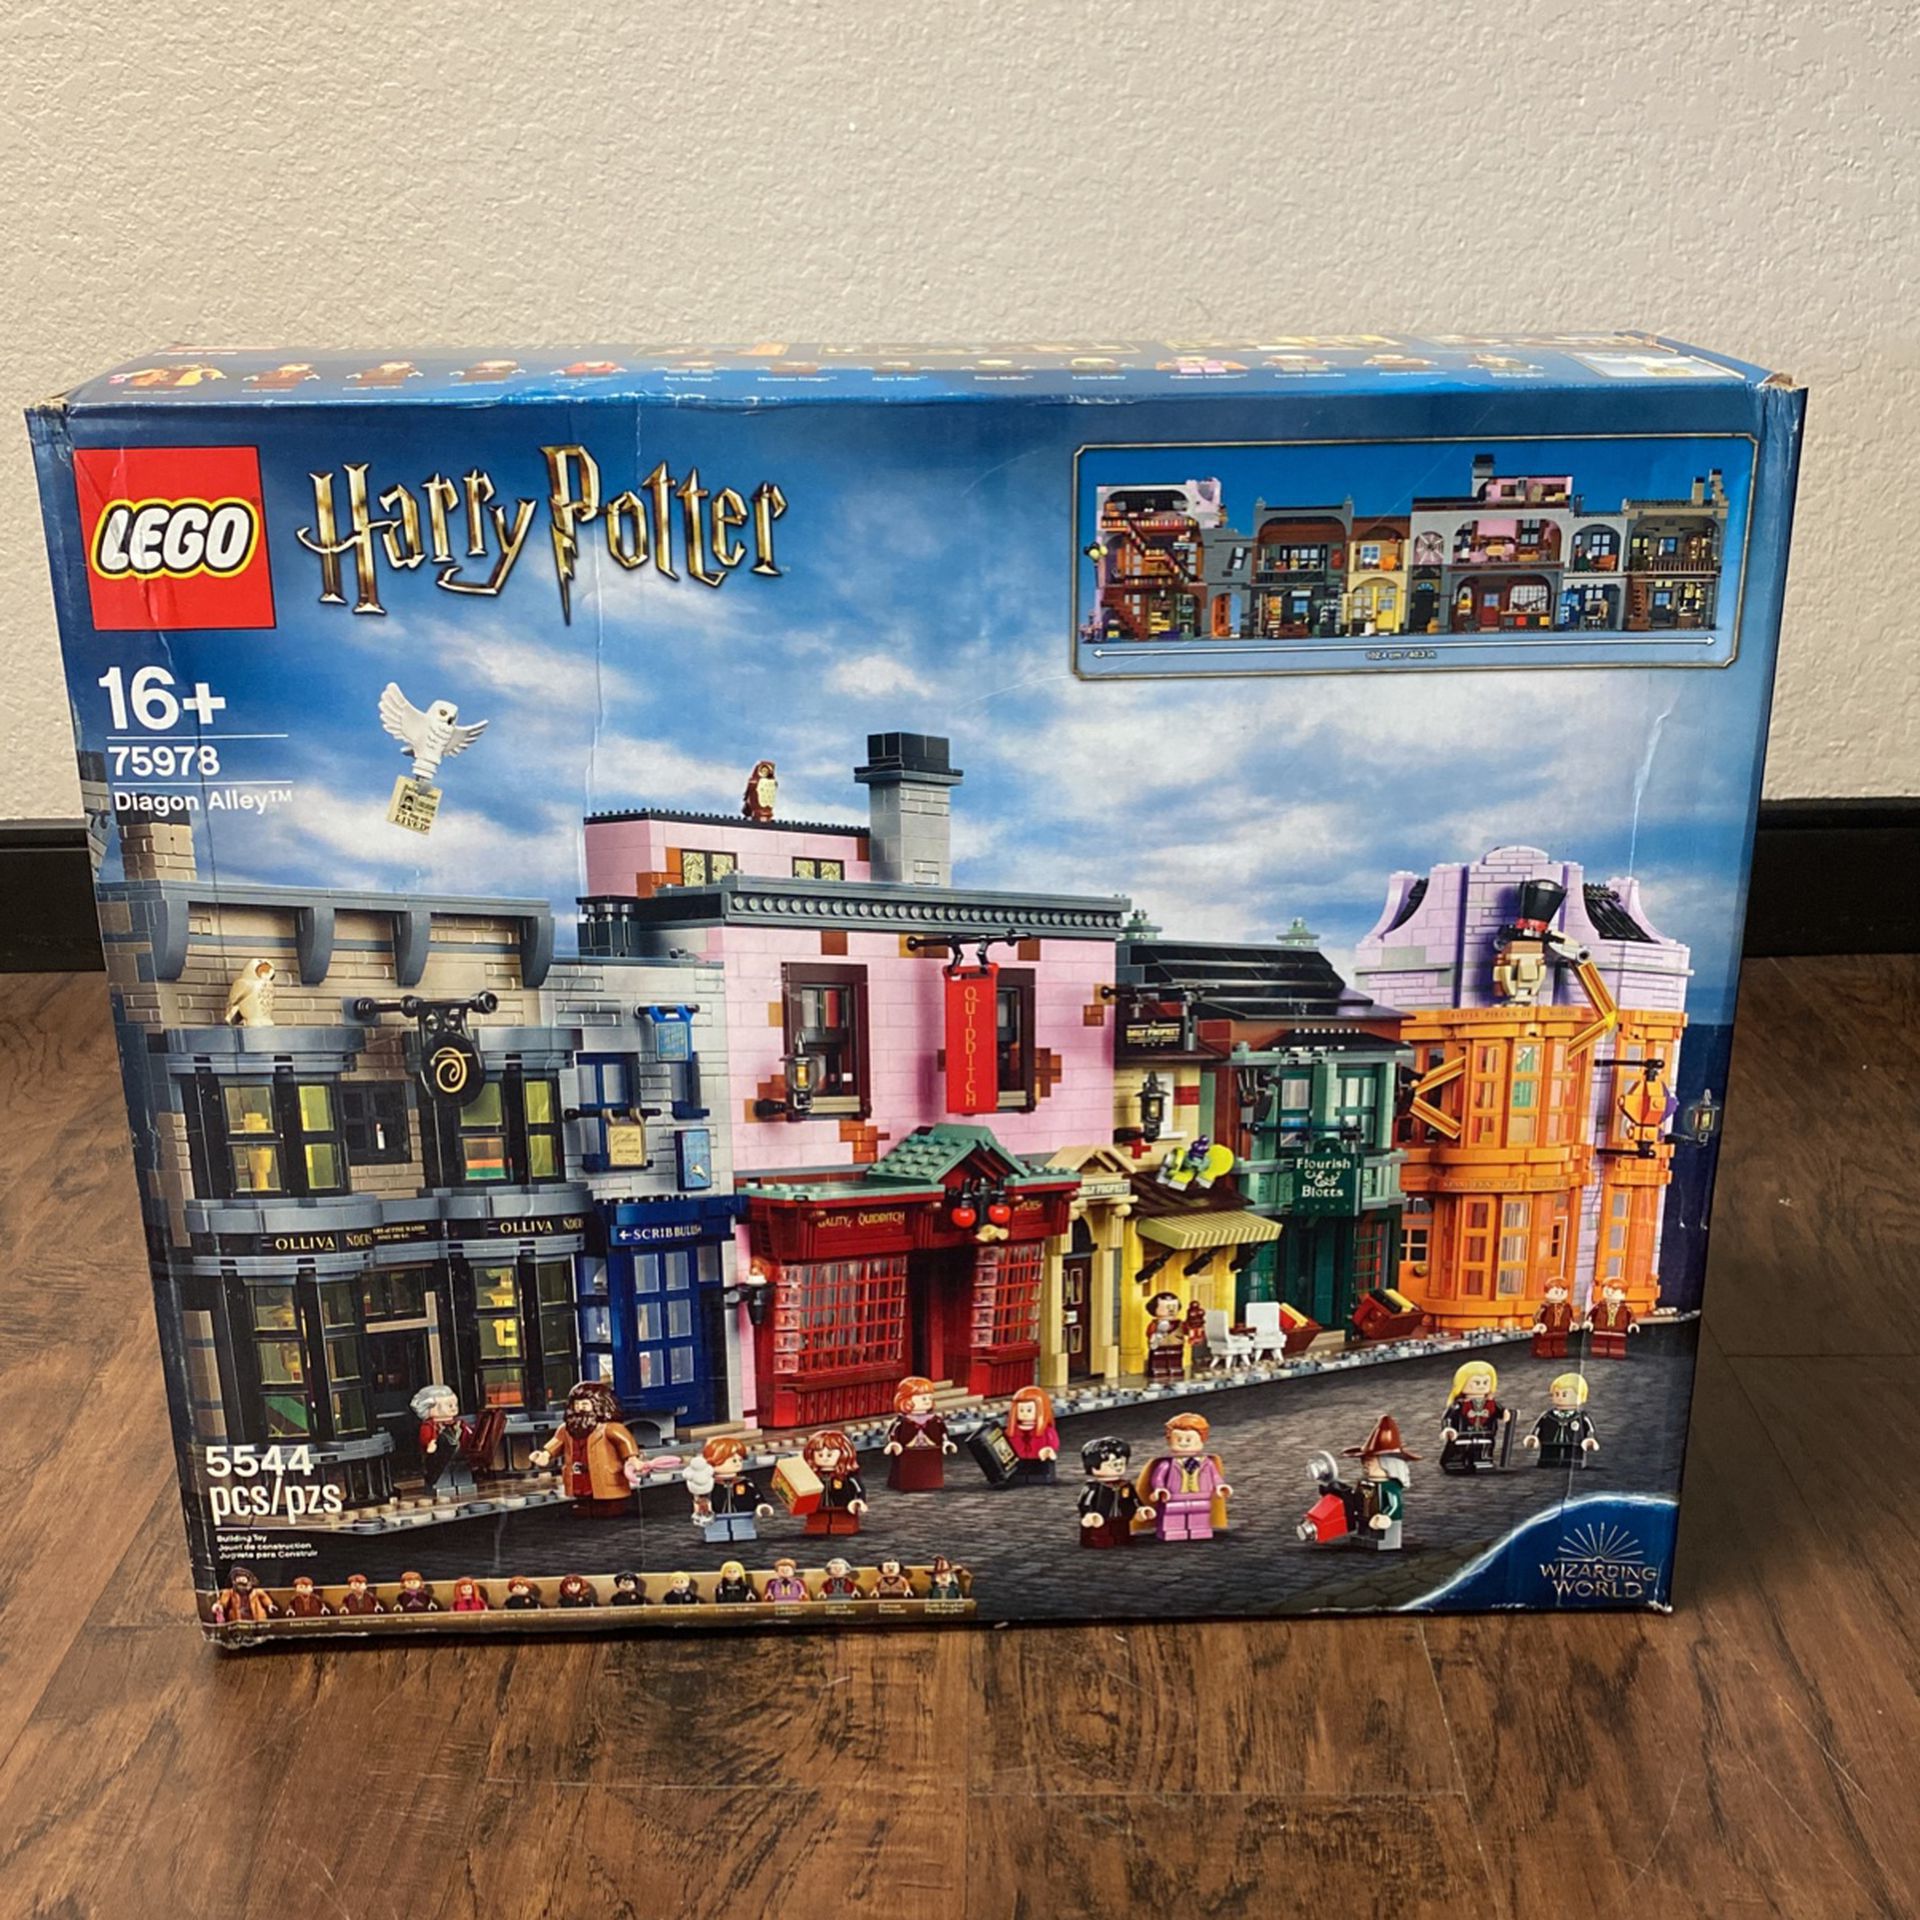 Harry Potter Lego Set (Diagon alley)